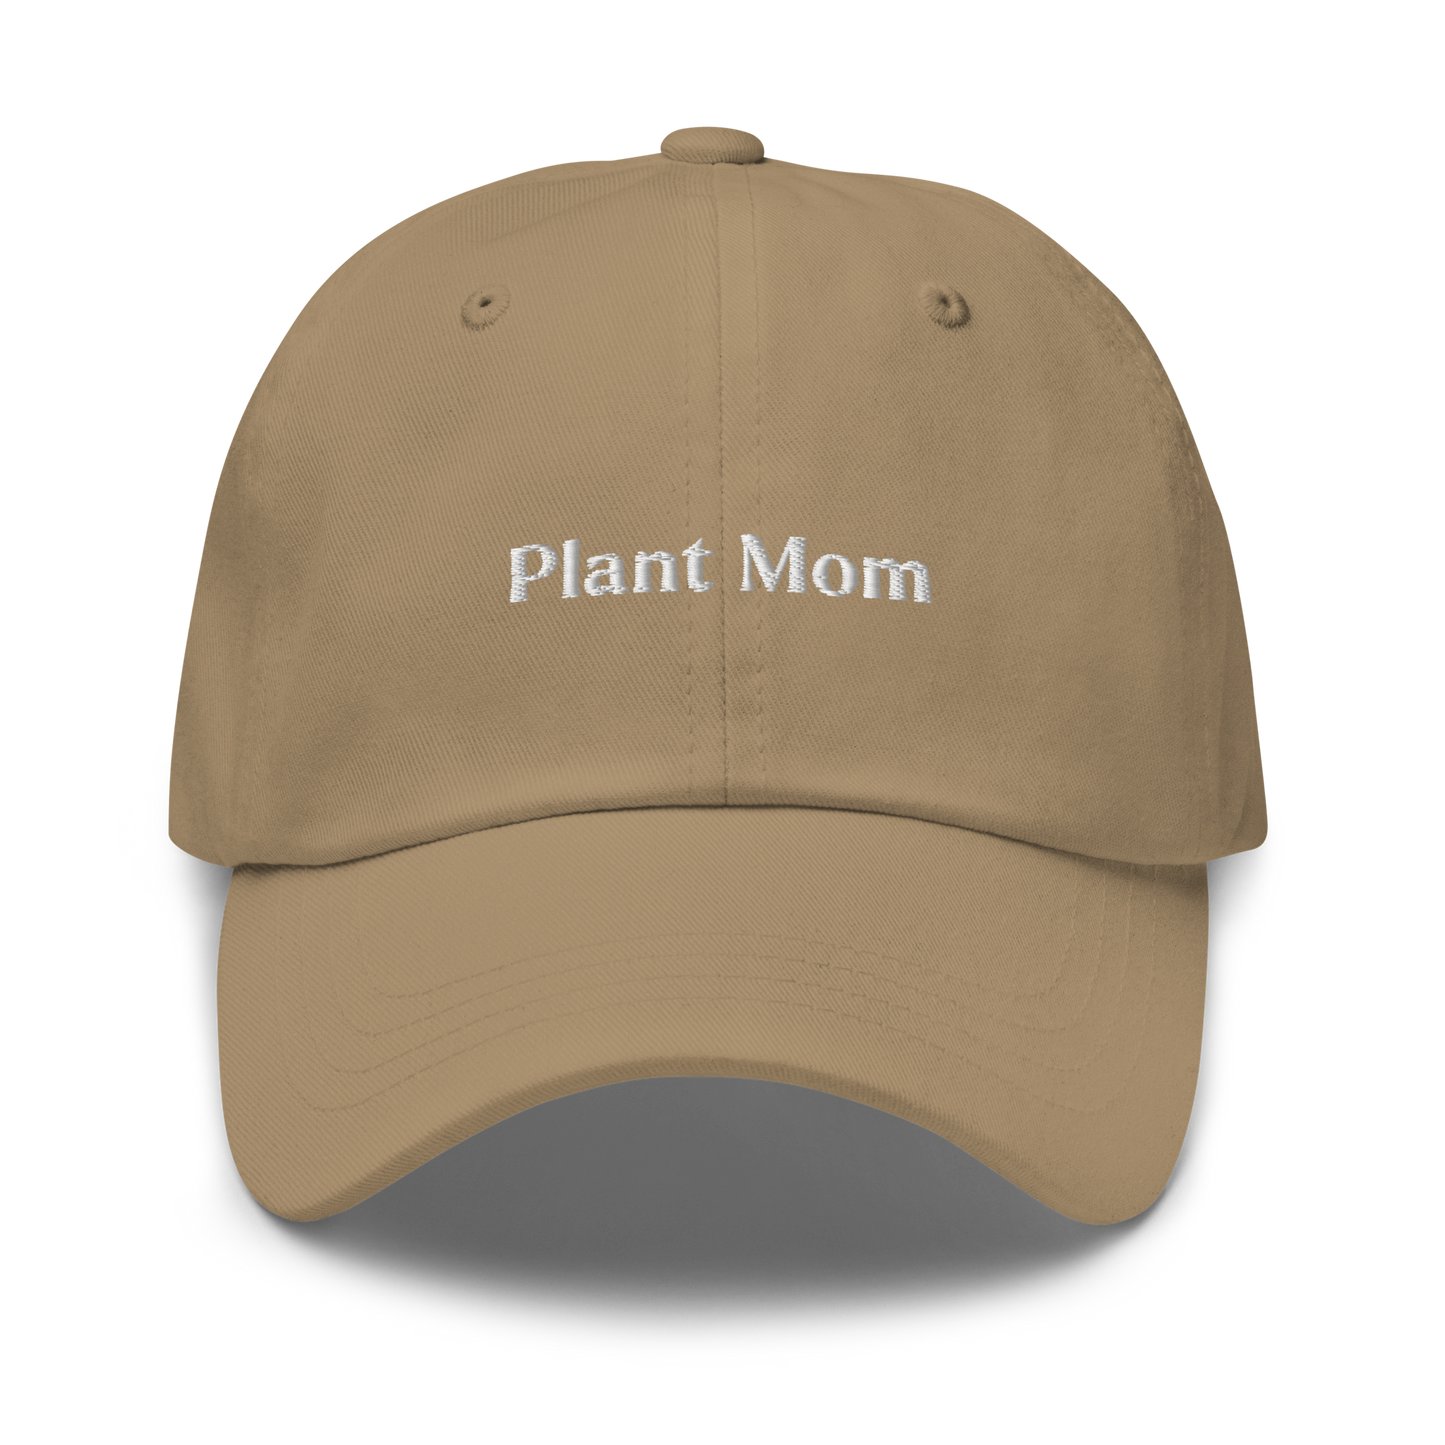 Plant Mom Baseball Cap